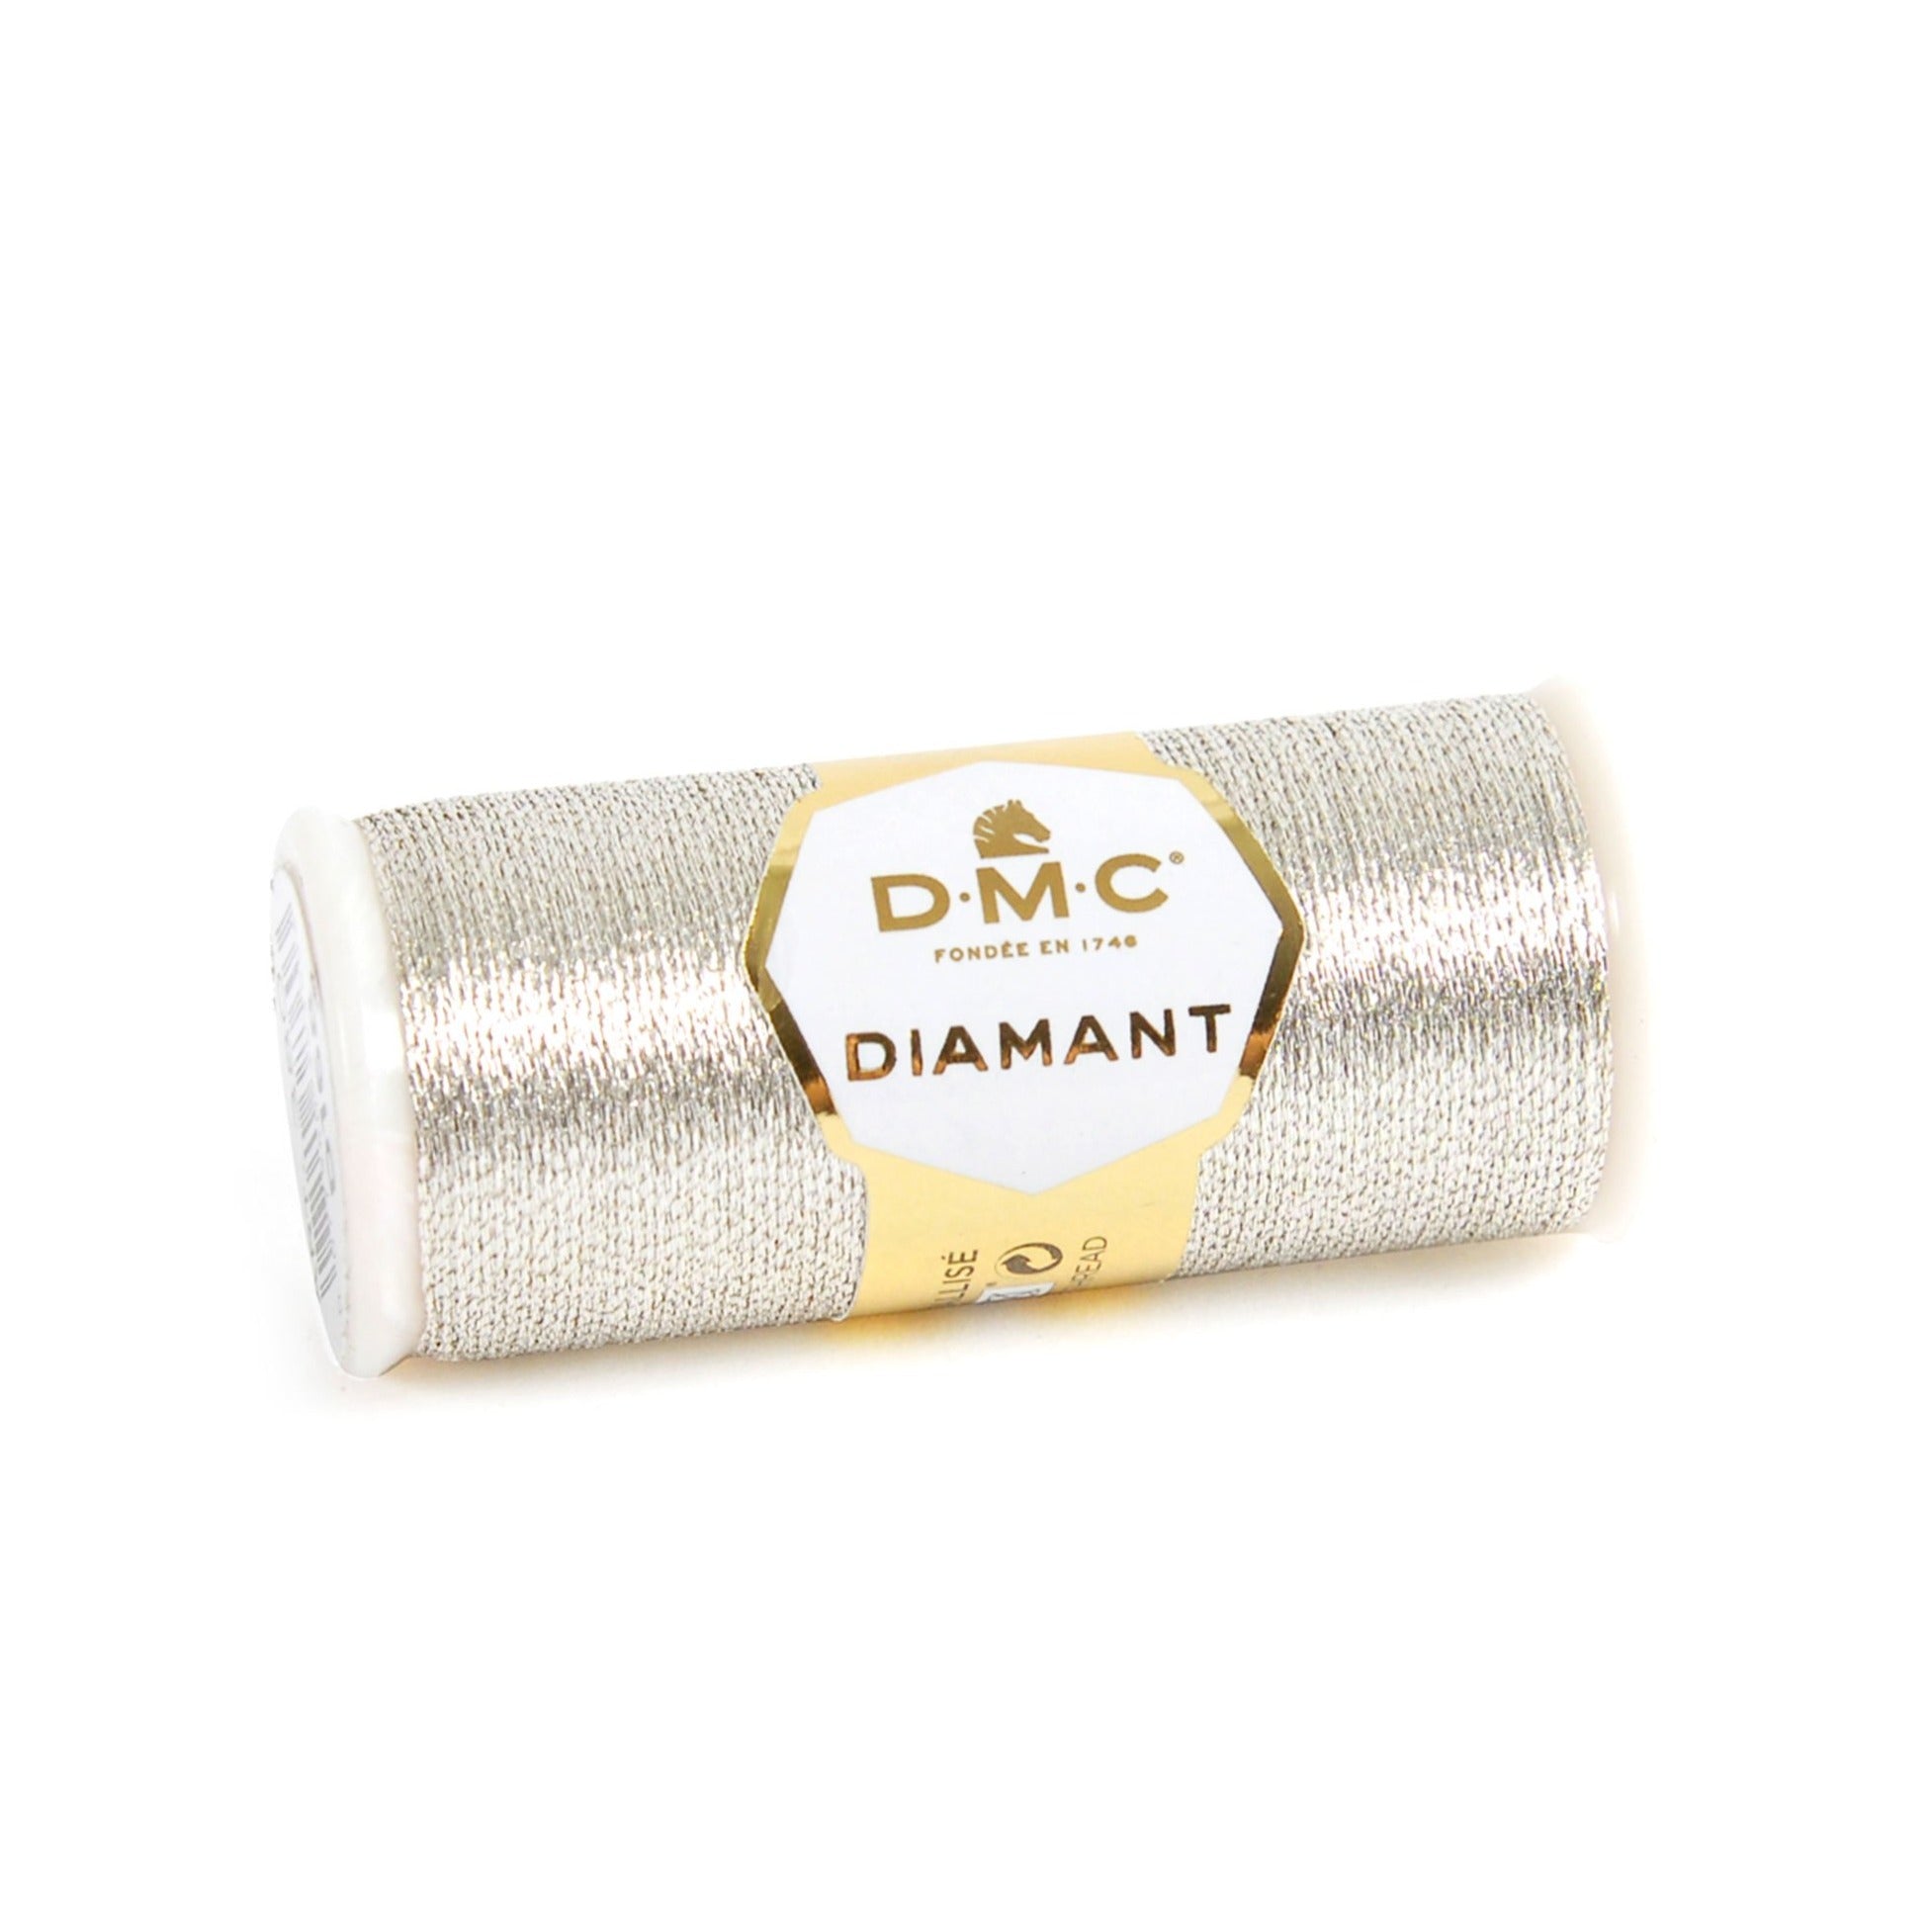 DMC Diamant Metallic Thread, Metallic Thread, Embroidery Thread, Cross  Stitch, Hand Embroidery Thread, DMC Metallic Thread, Metallic